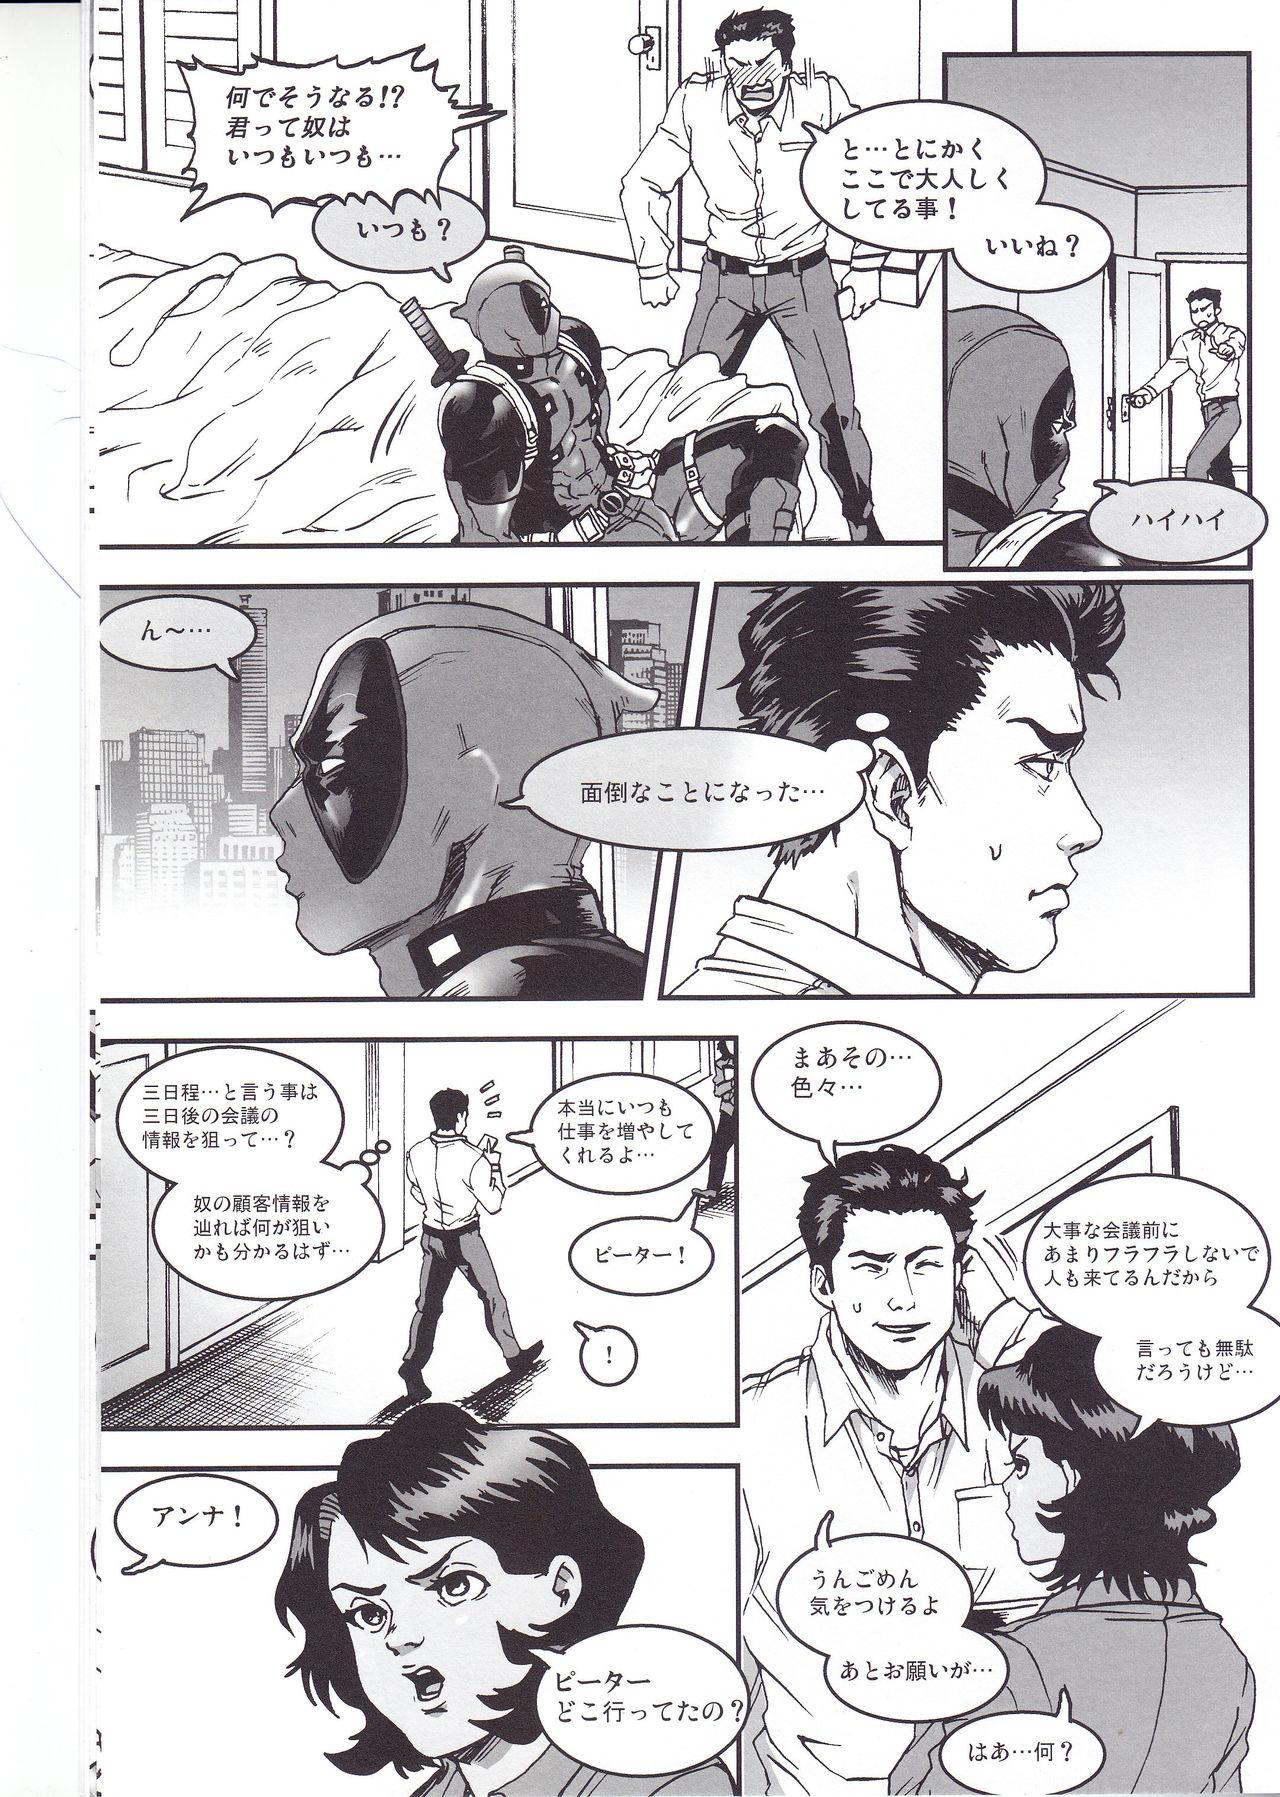 Petera THREE DAYS 1 - Spider-man Deadpool Casal - Page 9